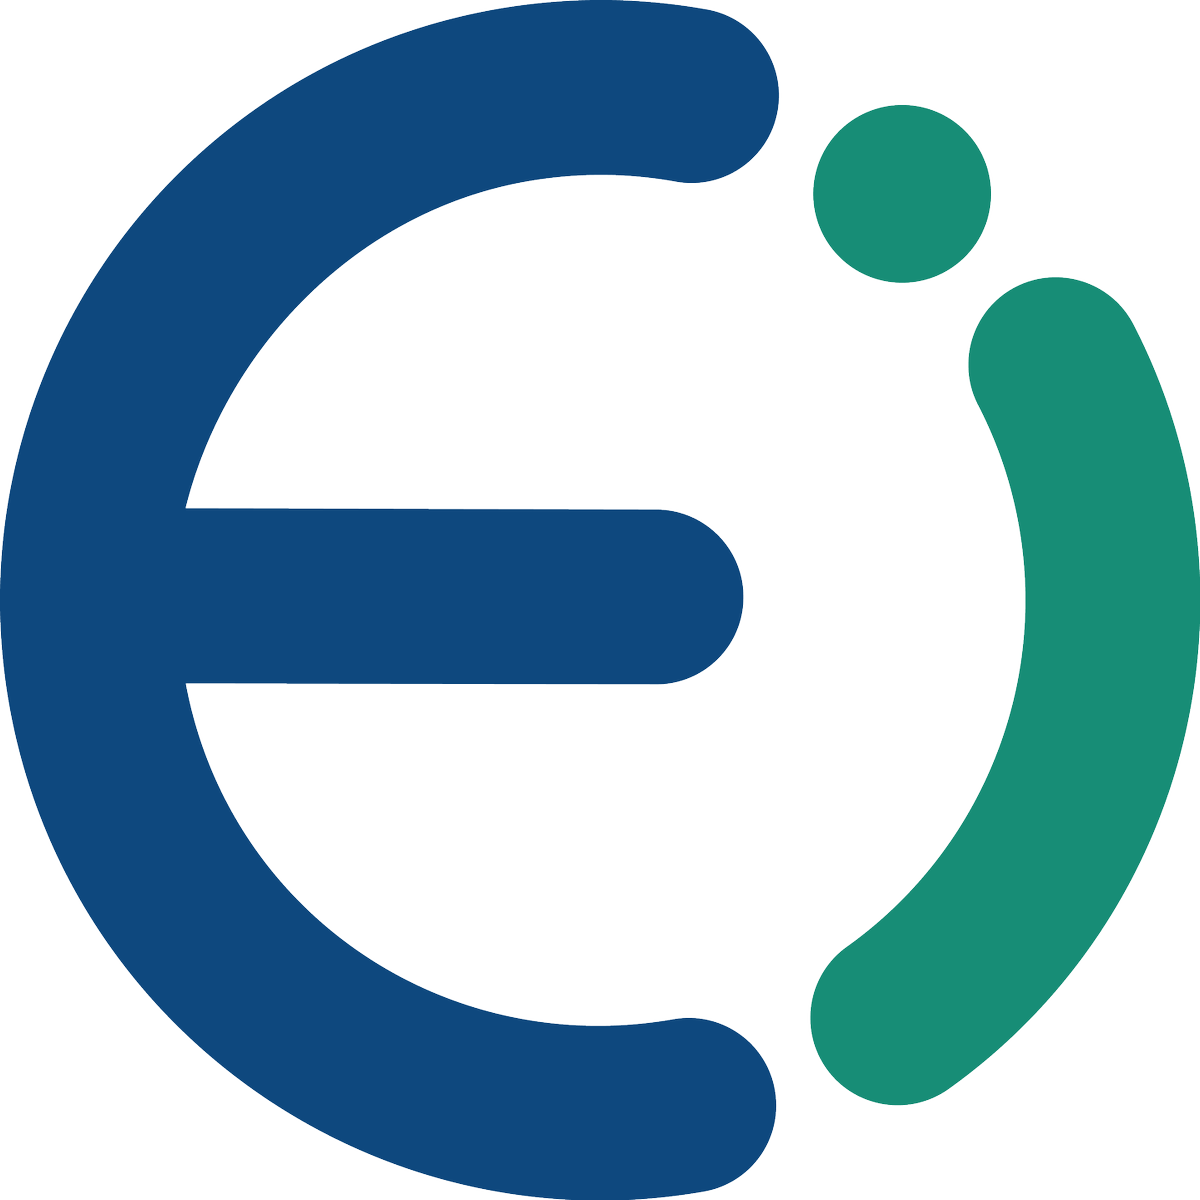 Эмблема e. Логотип ei. Логотип из буквы э. Лого буквы ЕИ.